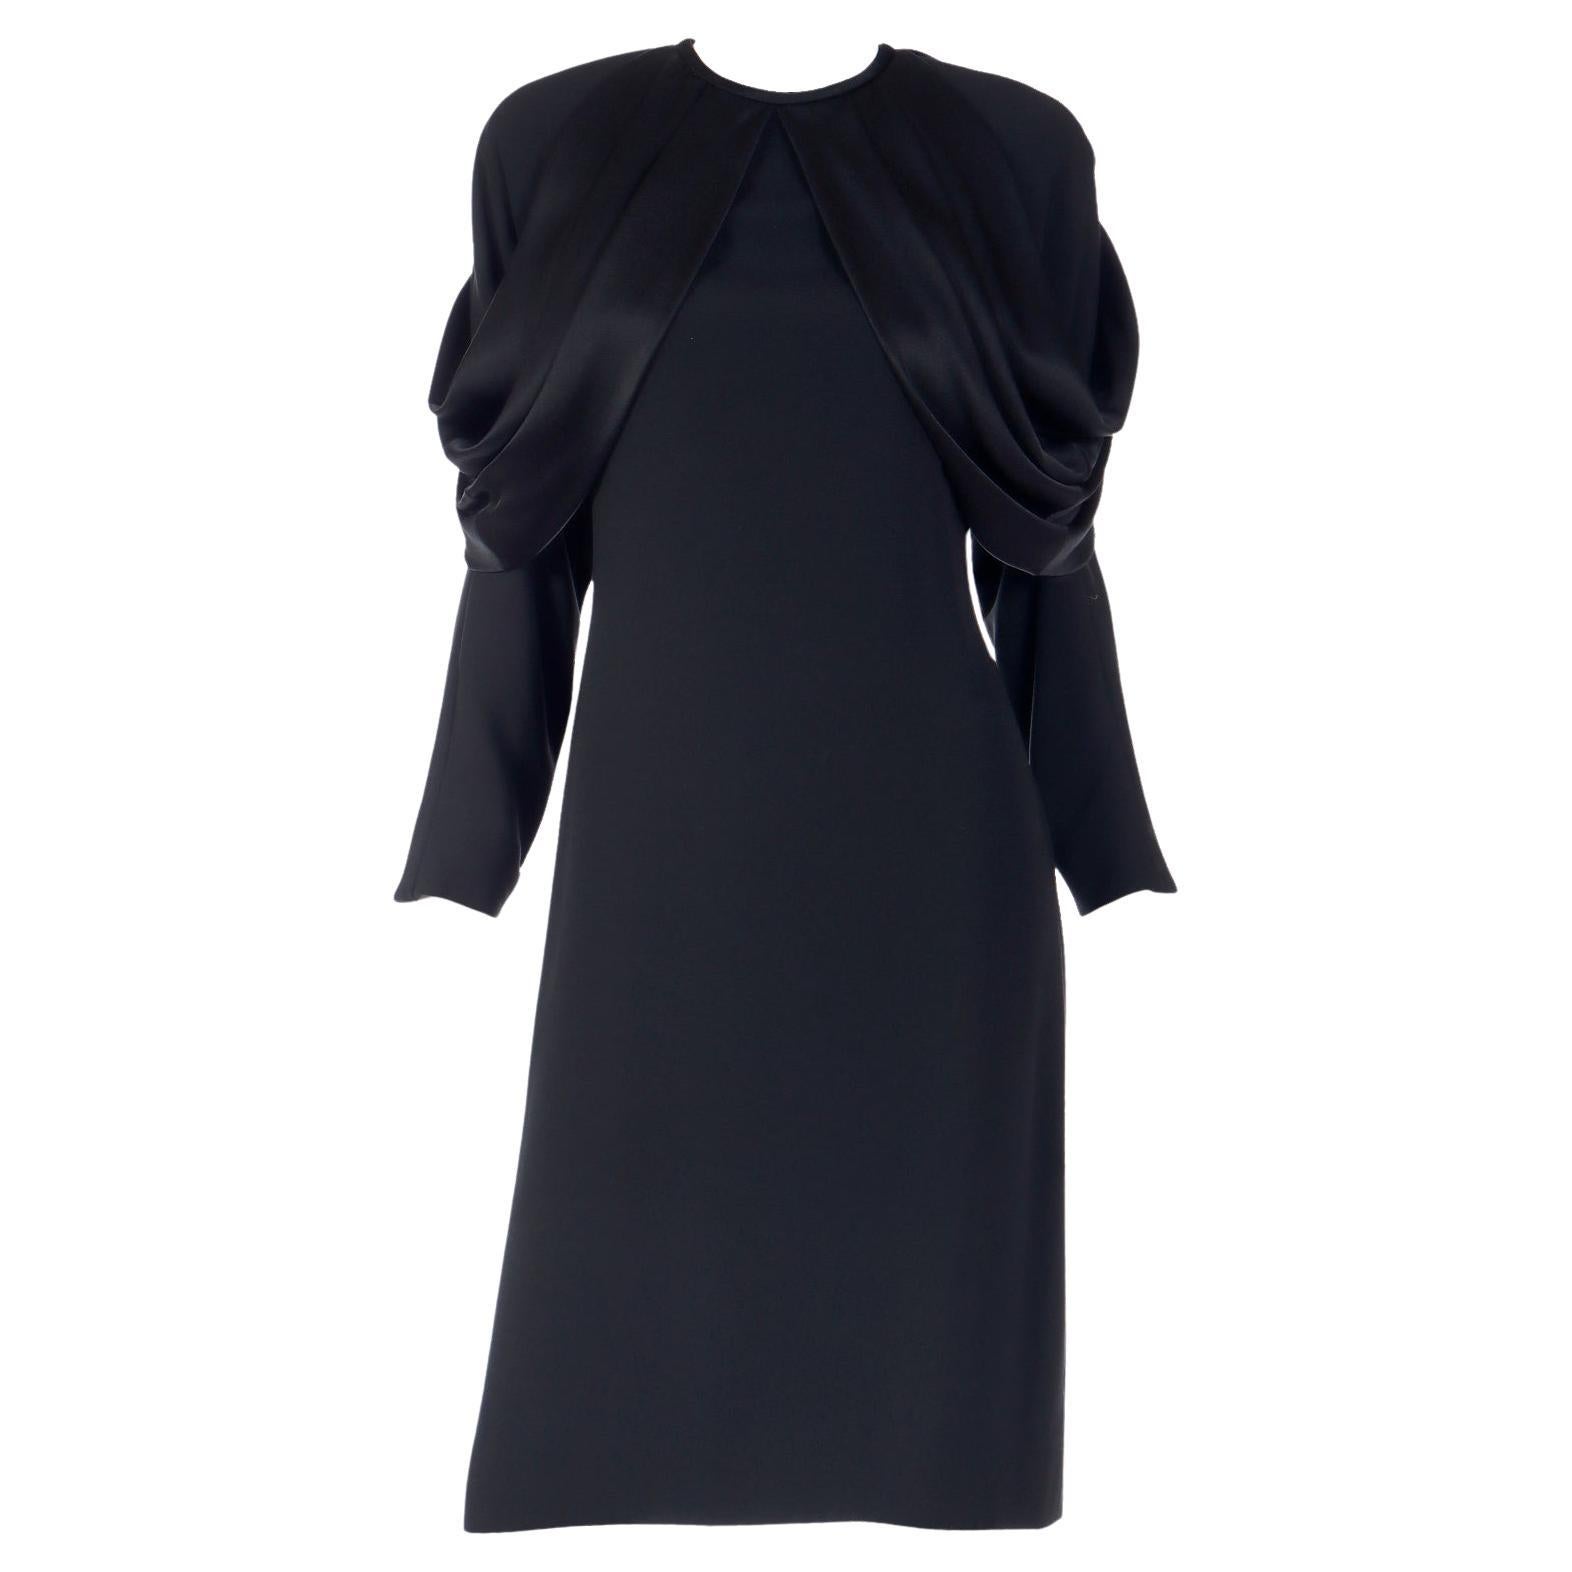 Adele Simpson Vintage Black Crepe Dress With Dramatic Satin Drape